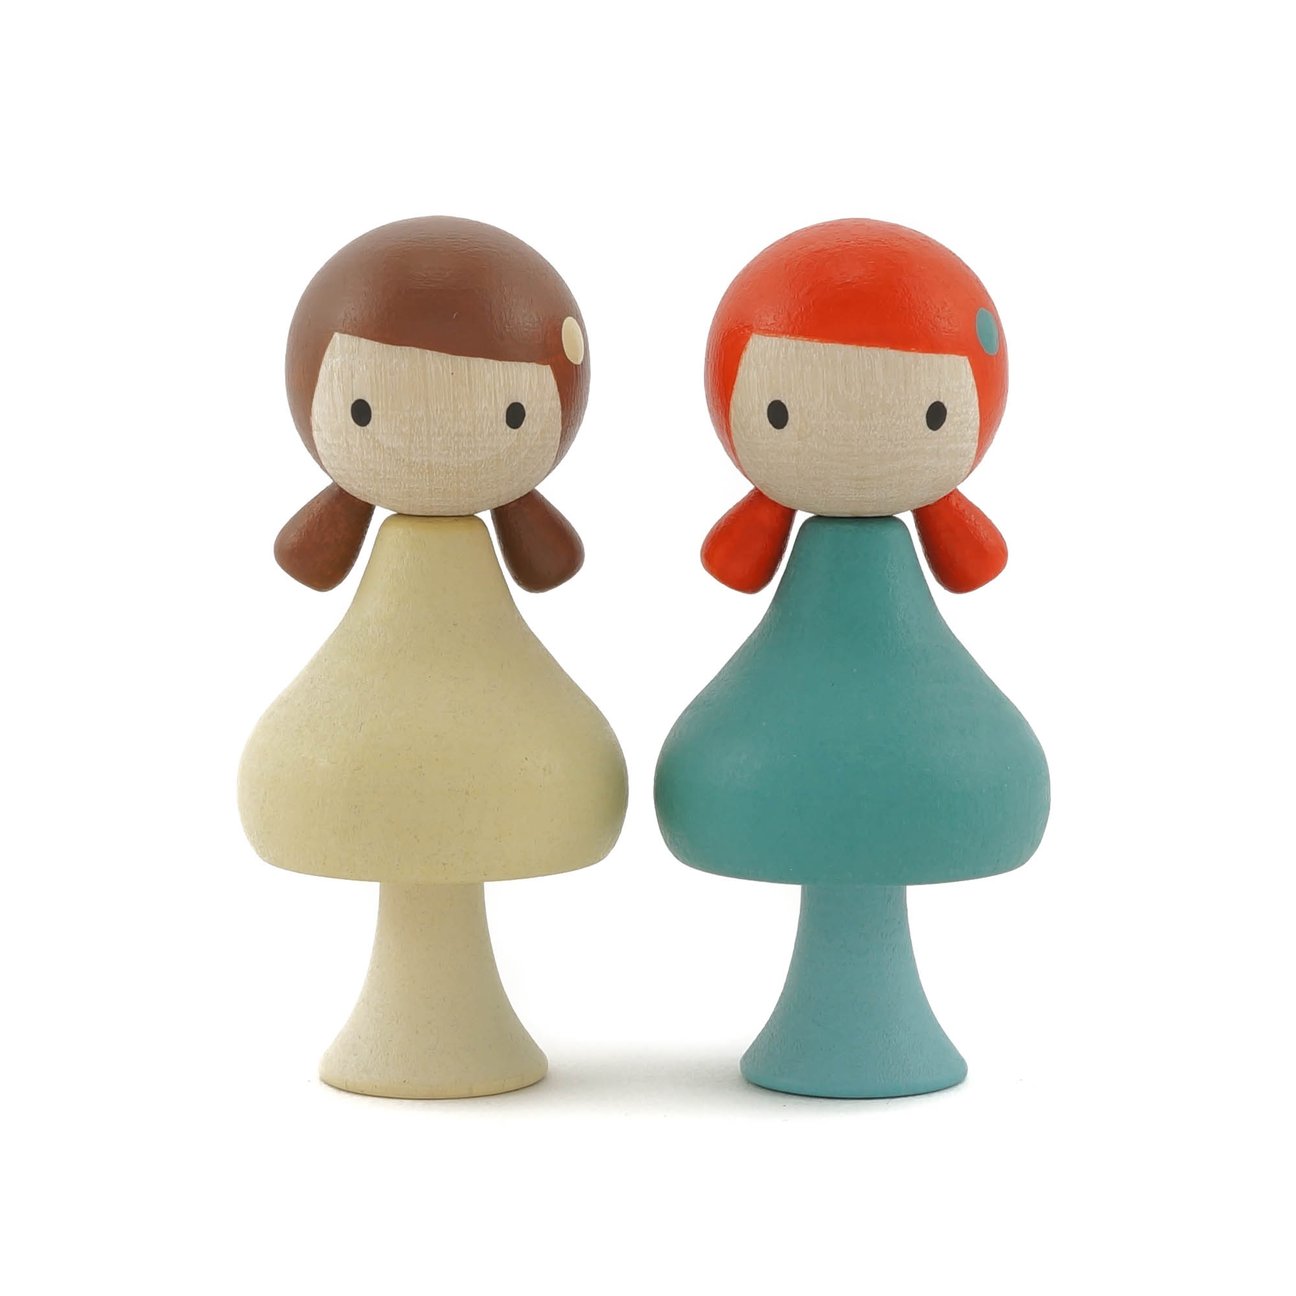 Clicques | Wooden Peg Dolls - Zoe & Stella